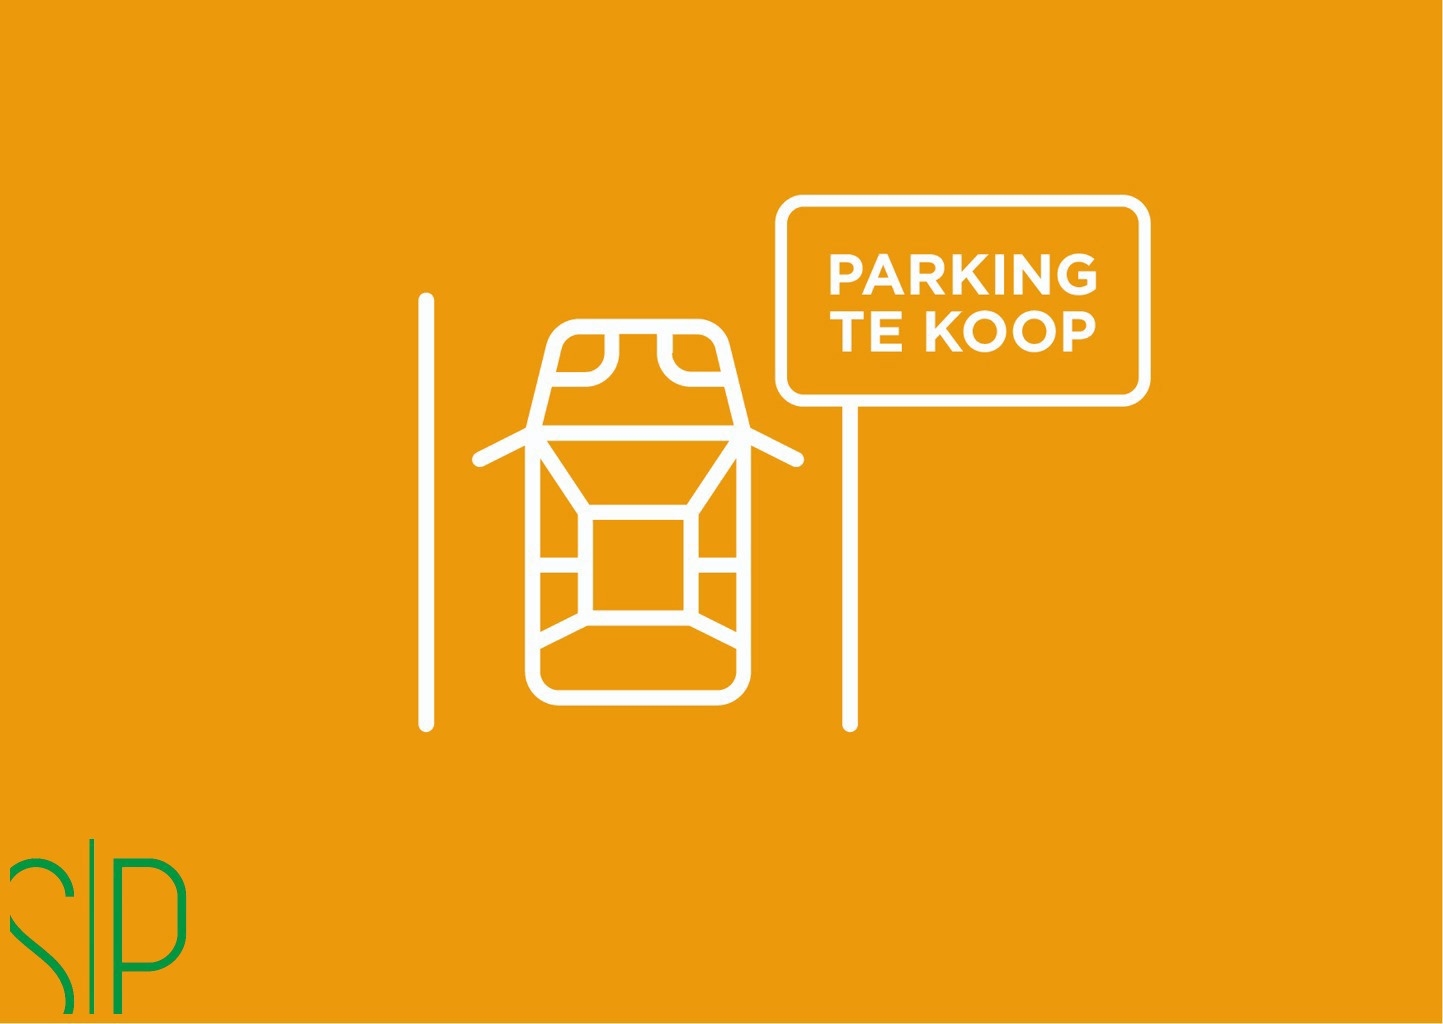 Parking te  koop in Veerle 2431 17500.00€  slaapkamers 12.50m² - Zoekertje 1369479